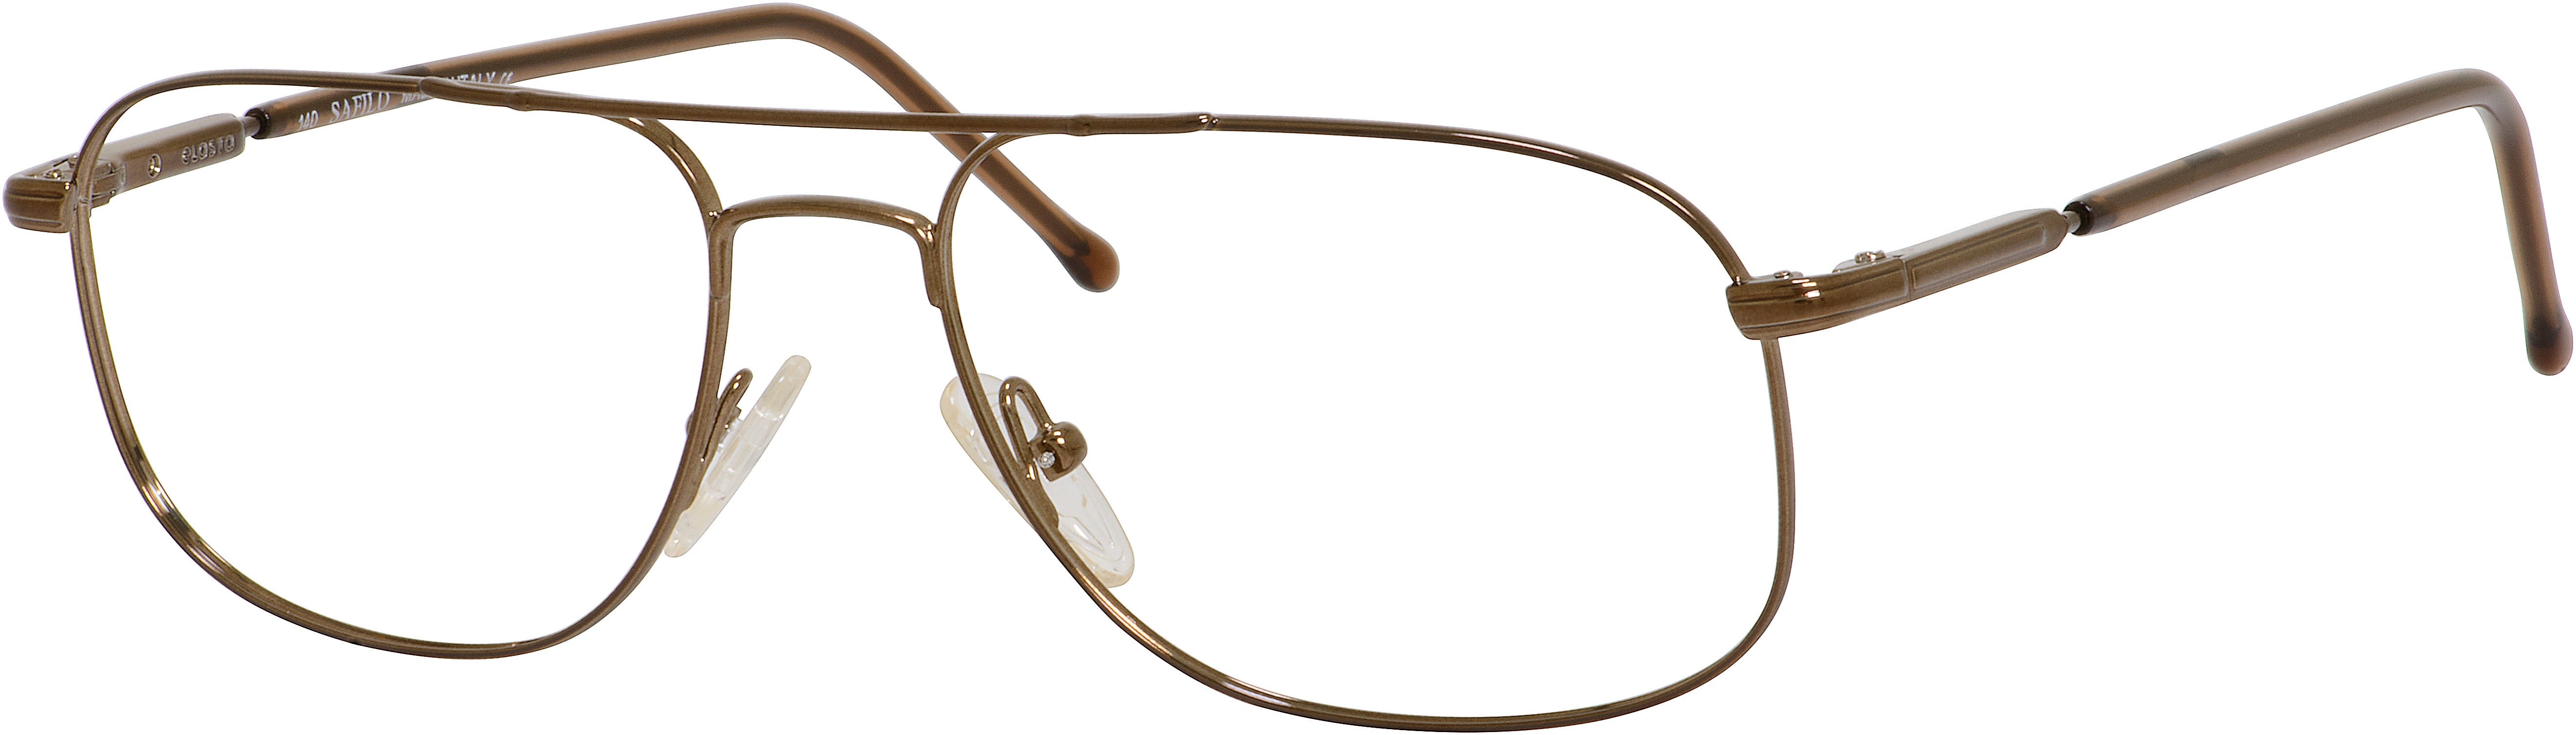  Elasta 7020 Rectangular Eyeglasses 09HM-09HM  Brown (00 Demo Lens)